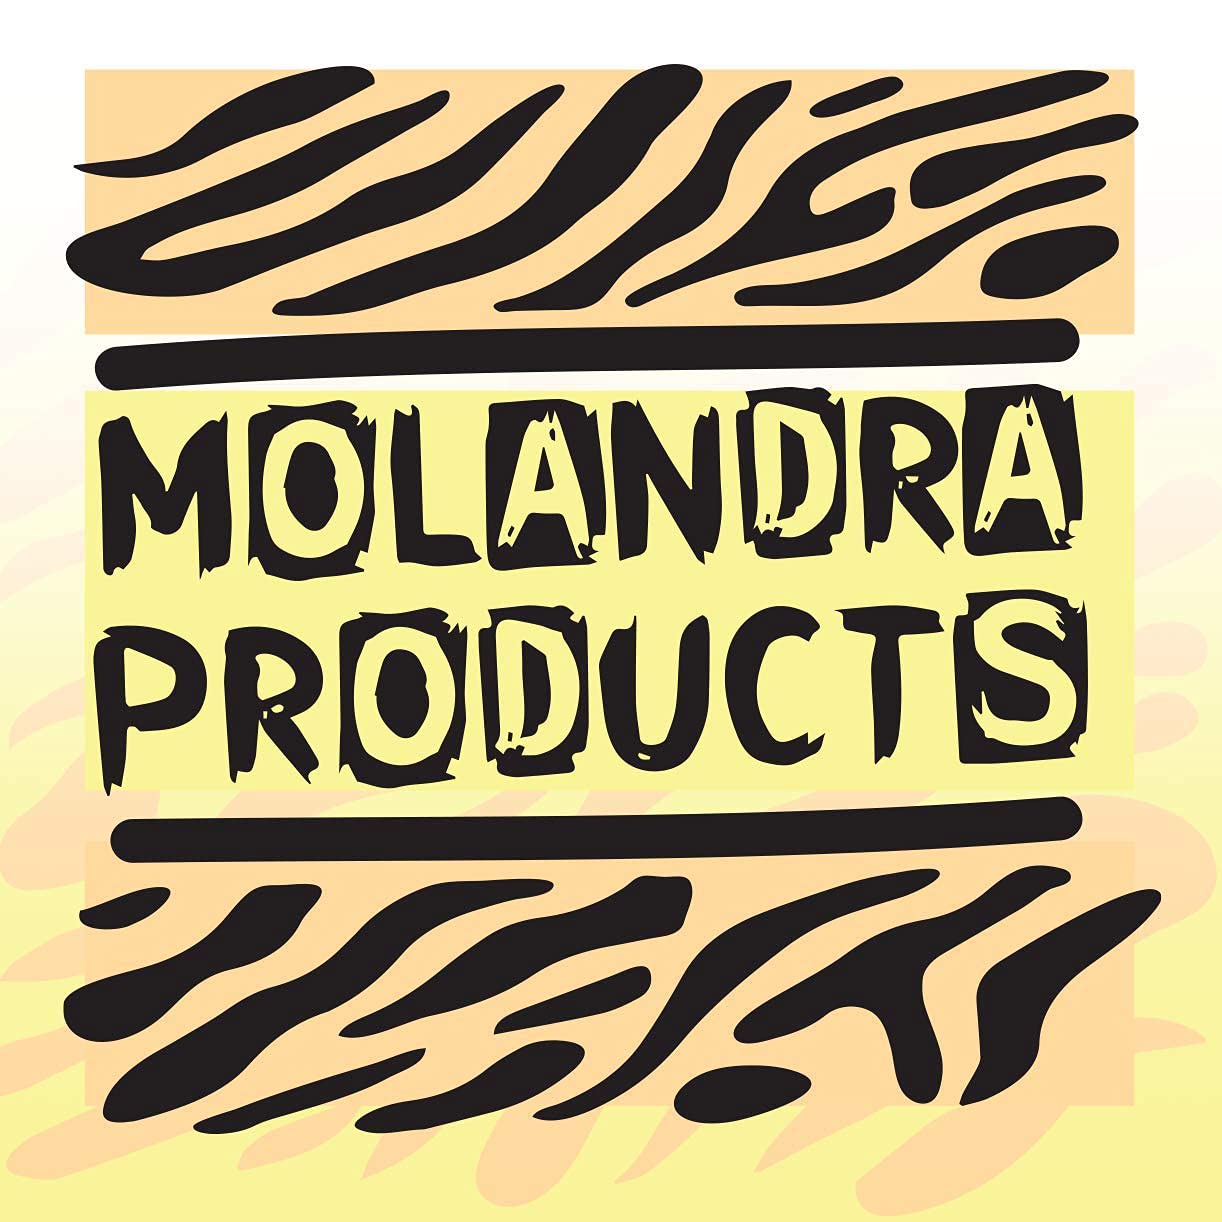 Molandra Products I Heart Love Getting A Henna Tattoo - Ceramic 11oz White Mug, White